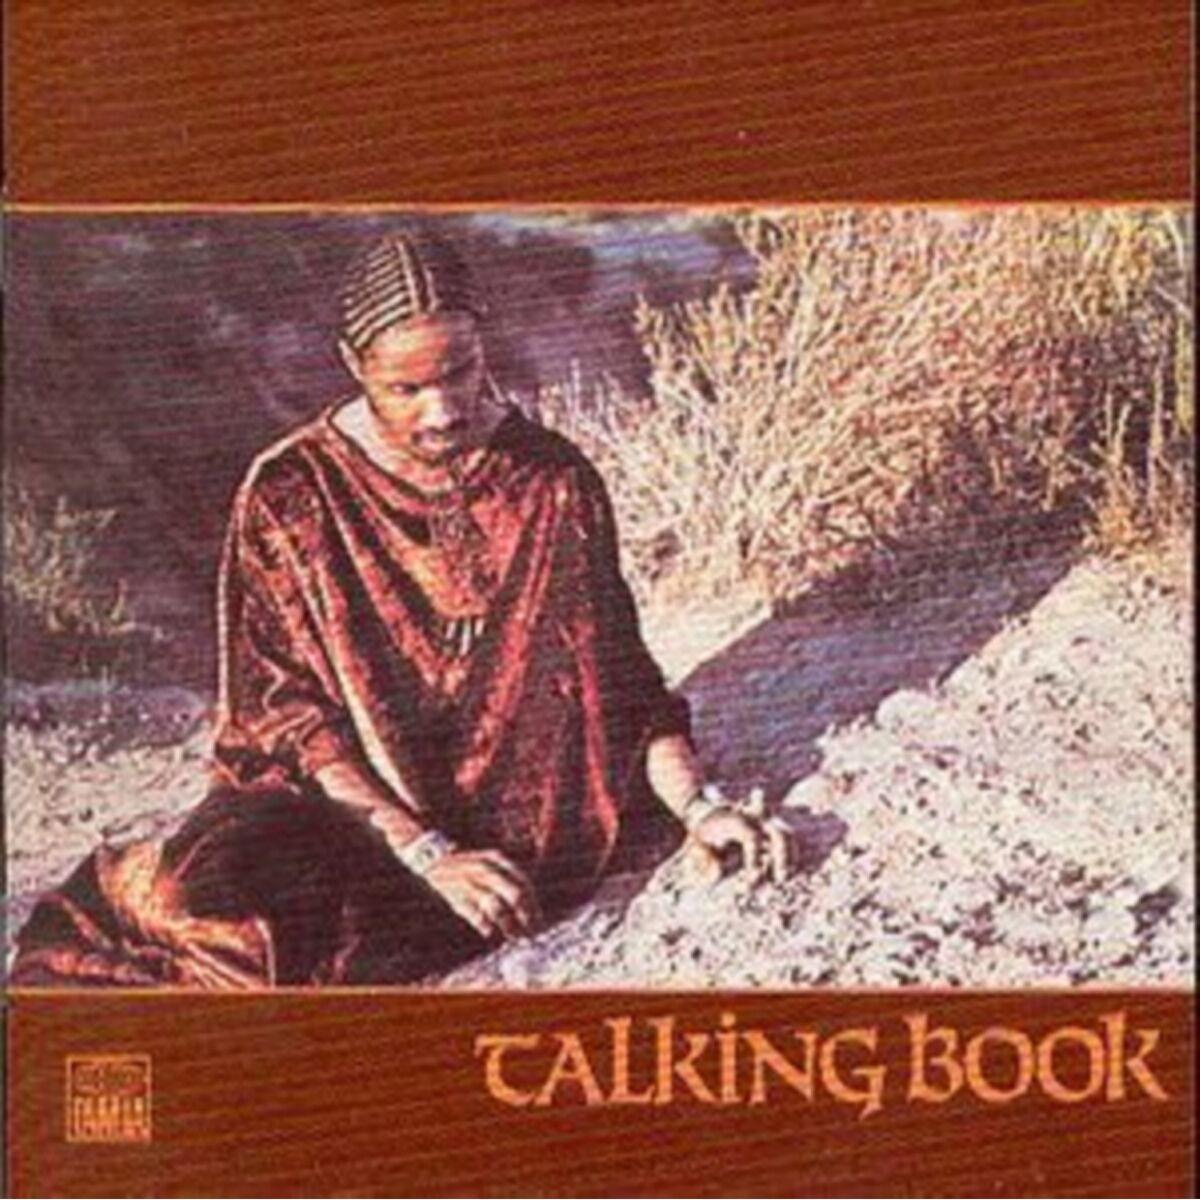 Wonder Stevie Talking Book (Remastered) (фирм.)